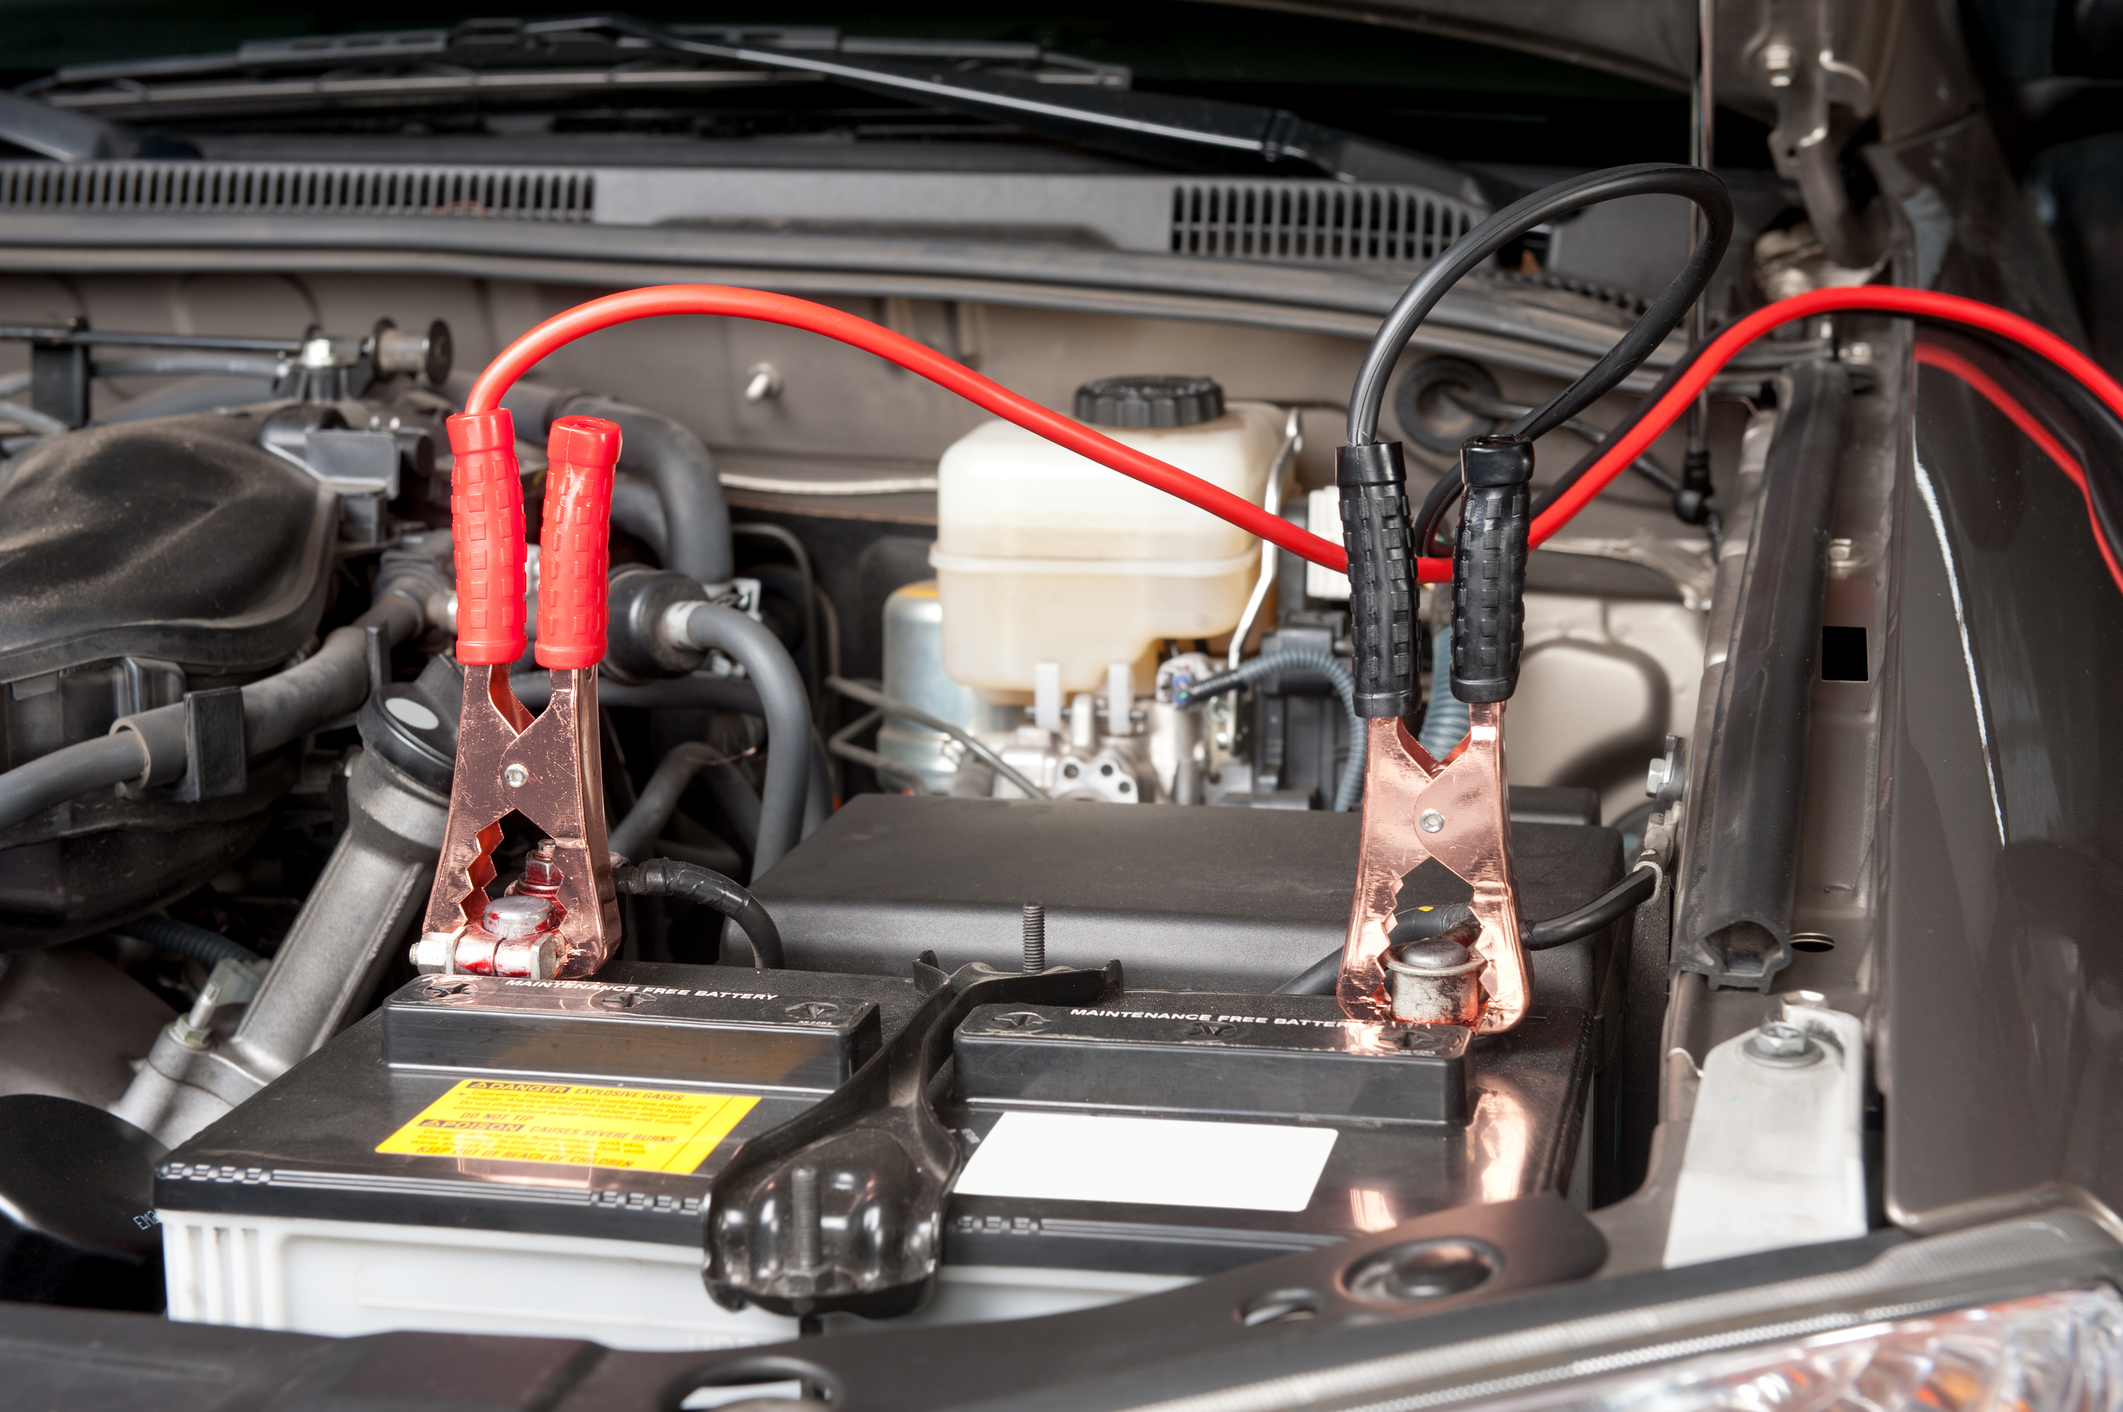 3 Myths About Car Battery Problems